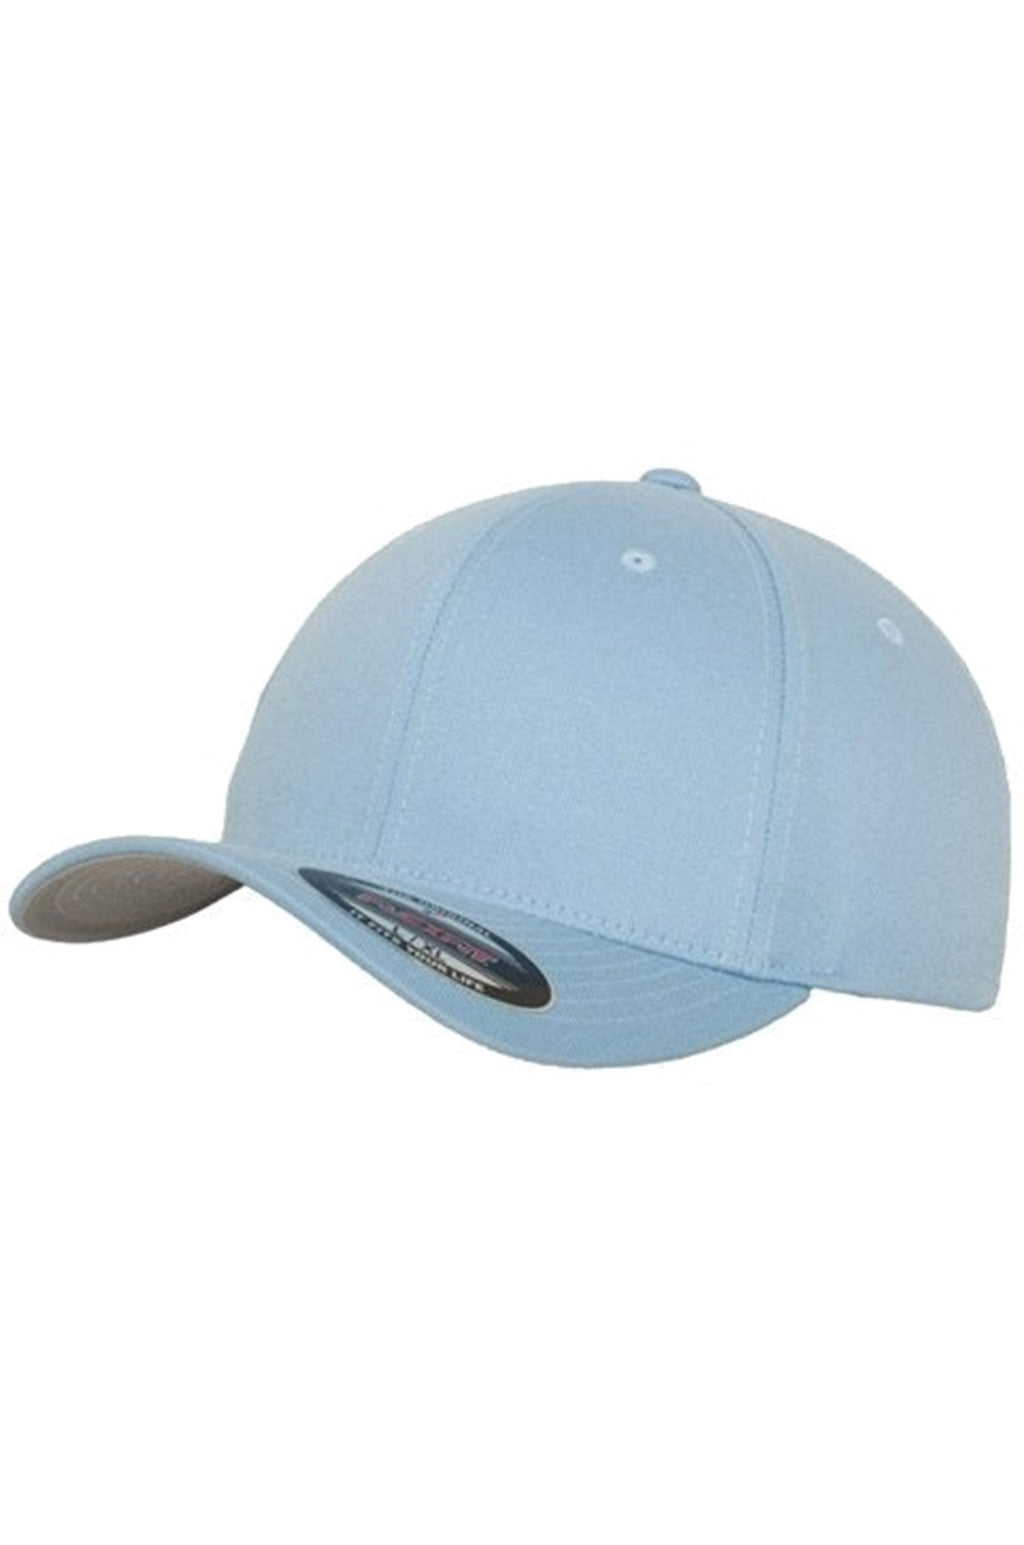 FlexFit Original Baseball Cap - Azul claro